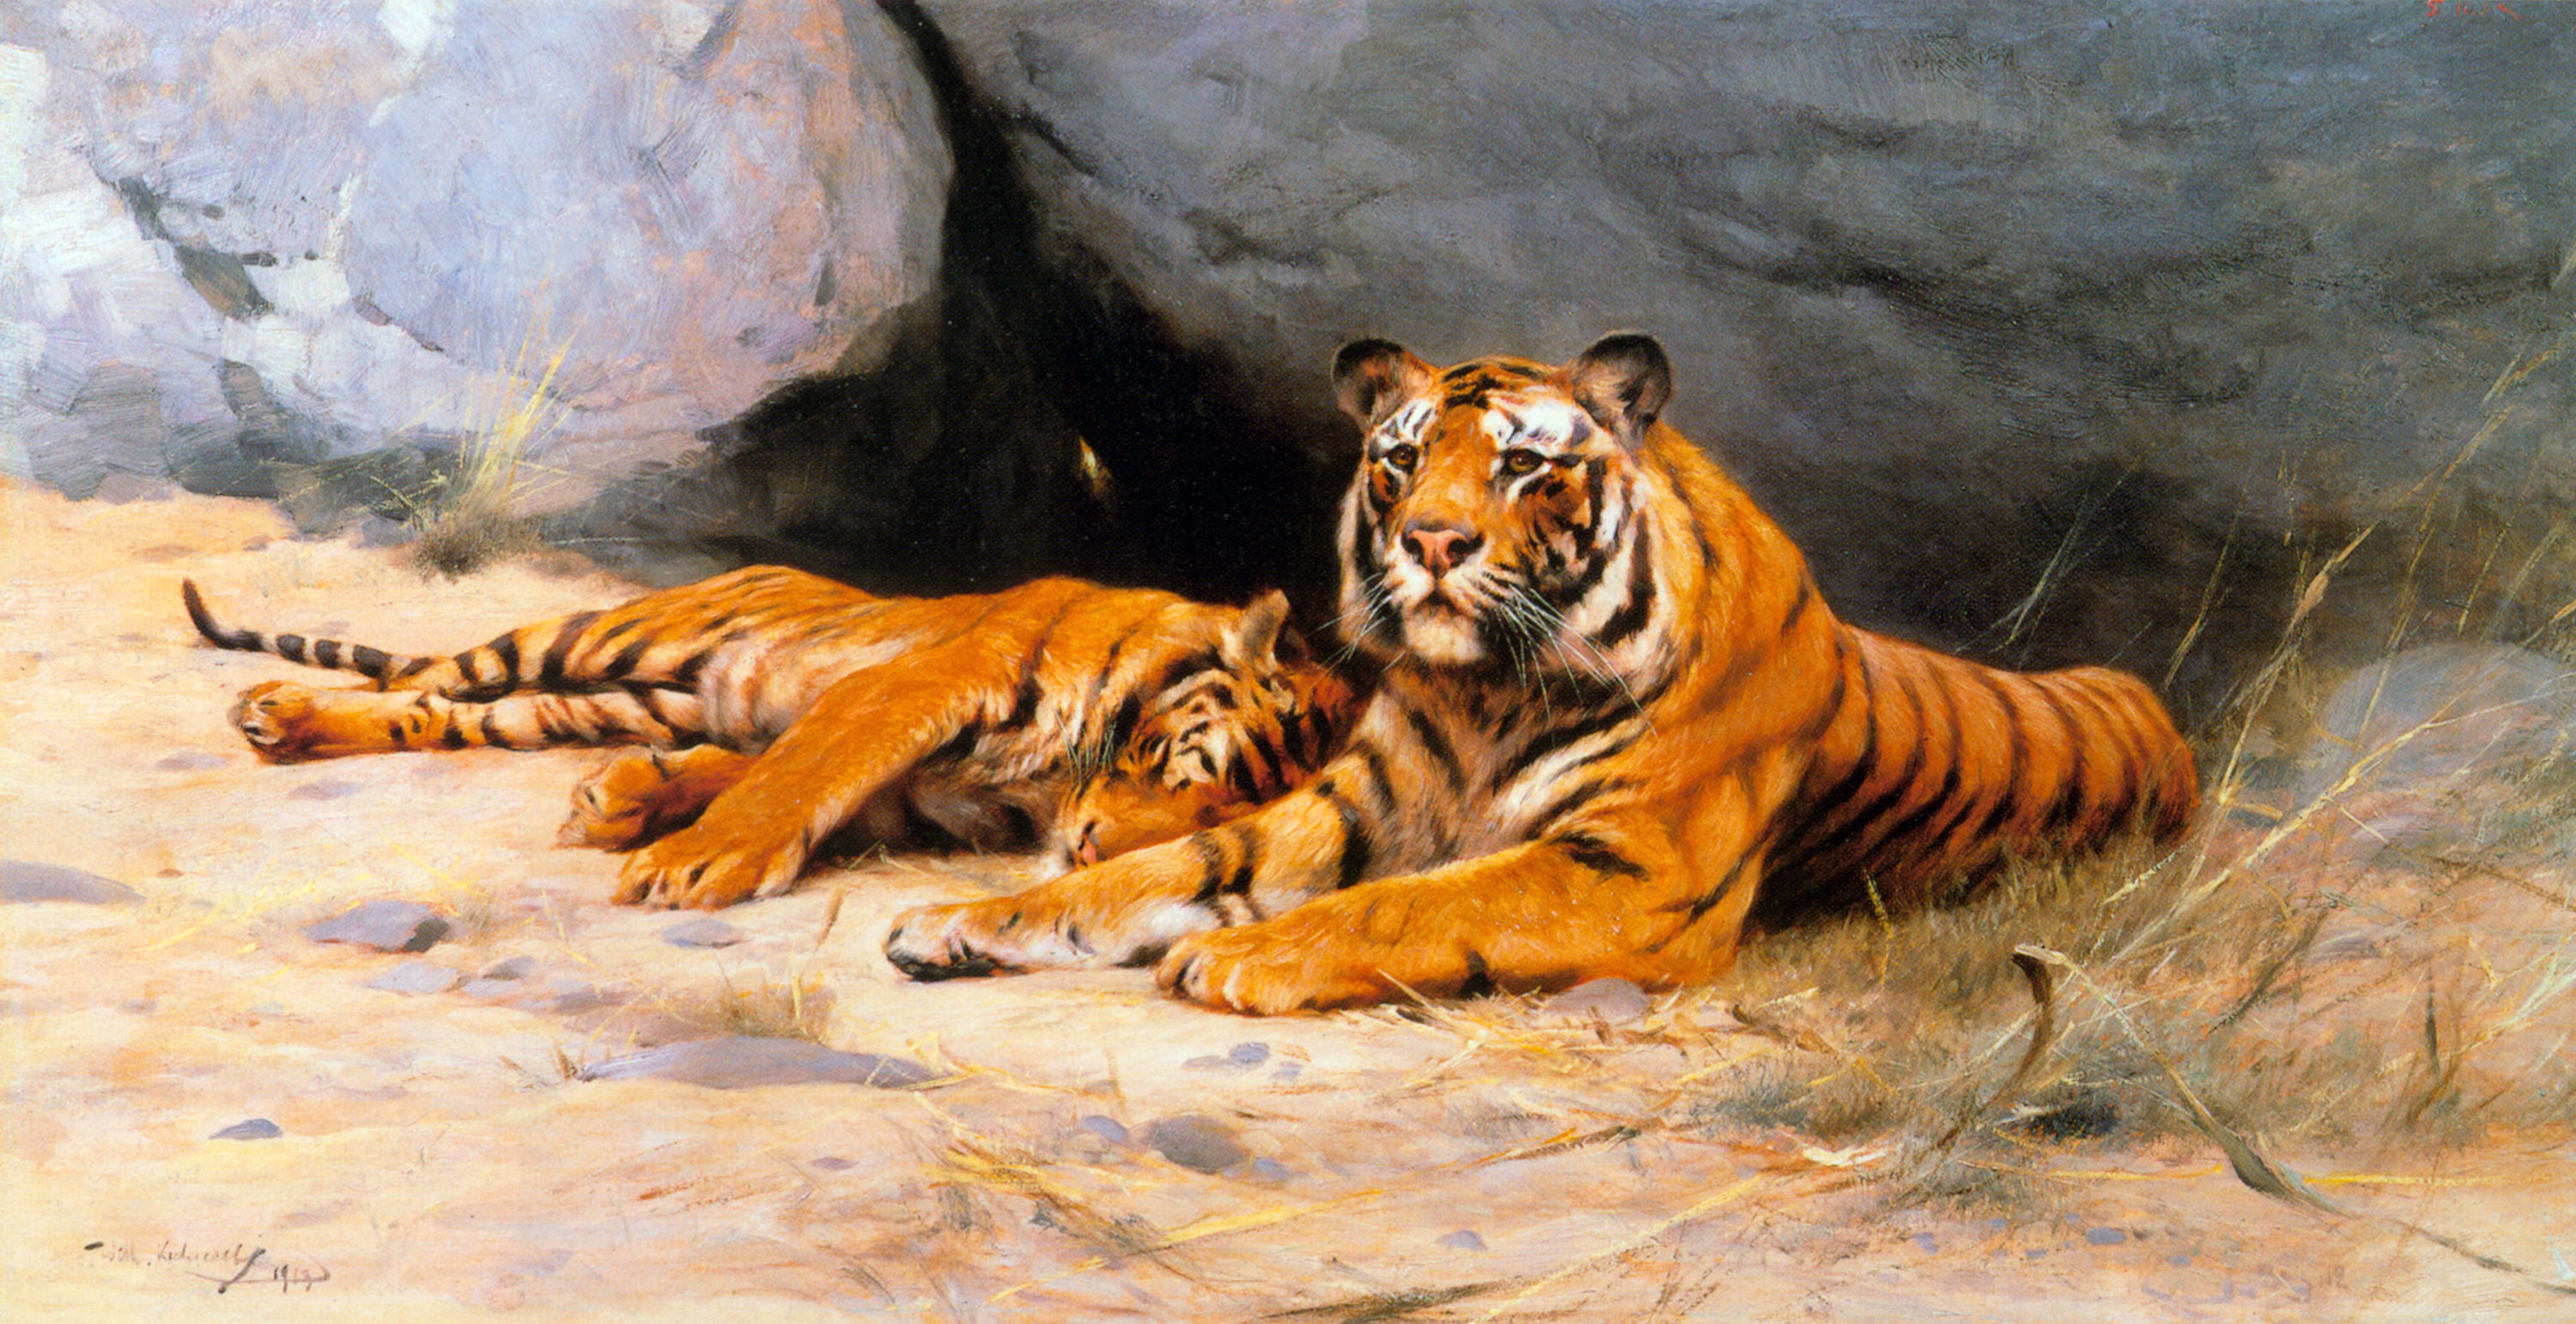 kuhnert_tigers-resting-1913